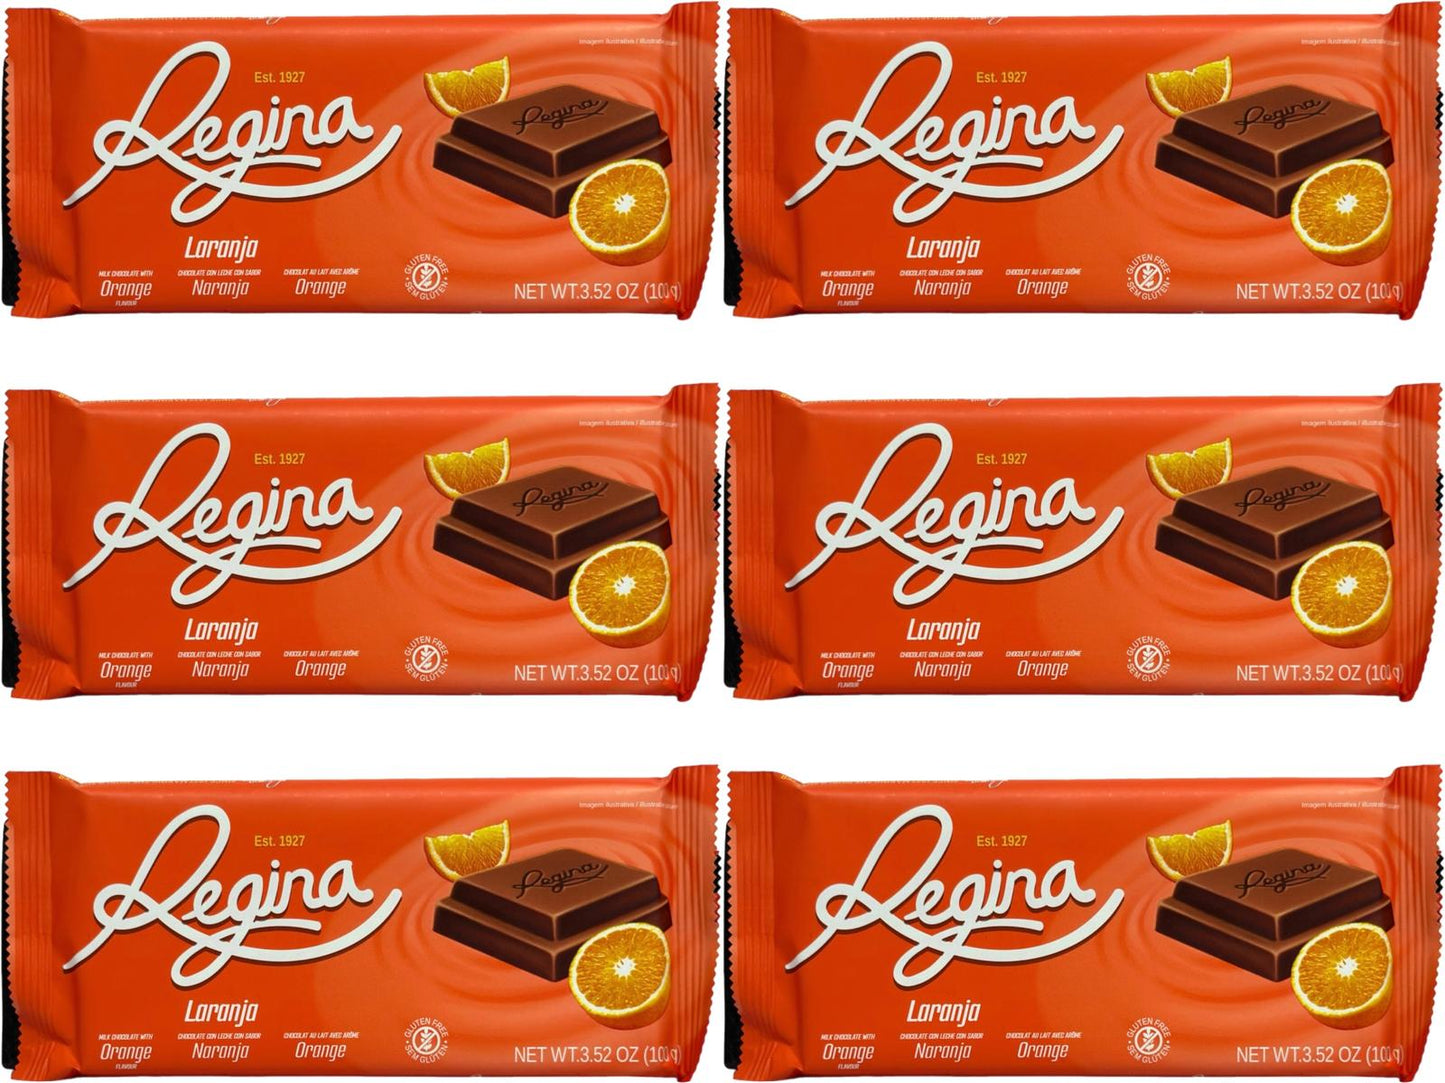 Regina Laranja Chocolate Portuguese Milk Chocolate with Orange Flavour 100g - 6 Pack 600g total